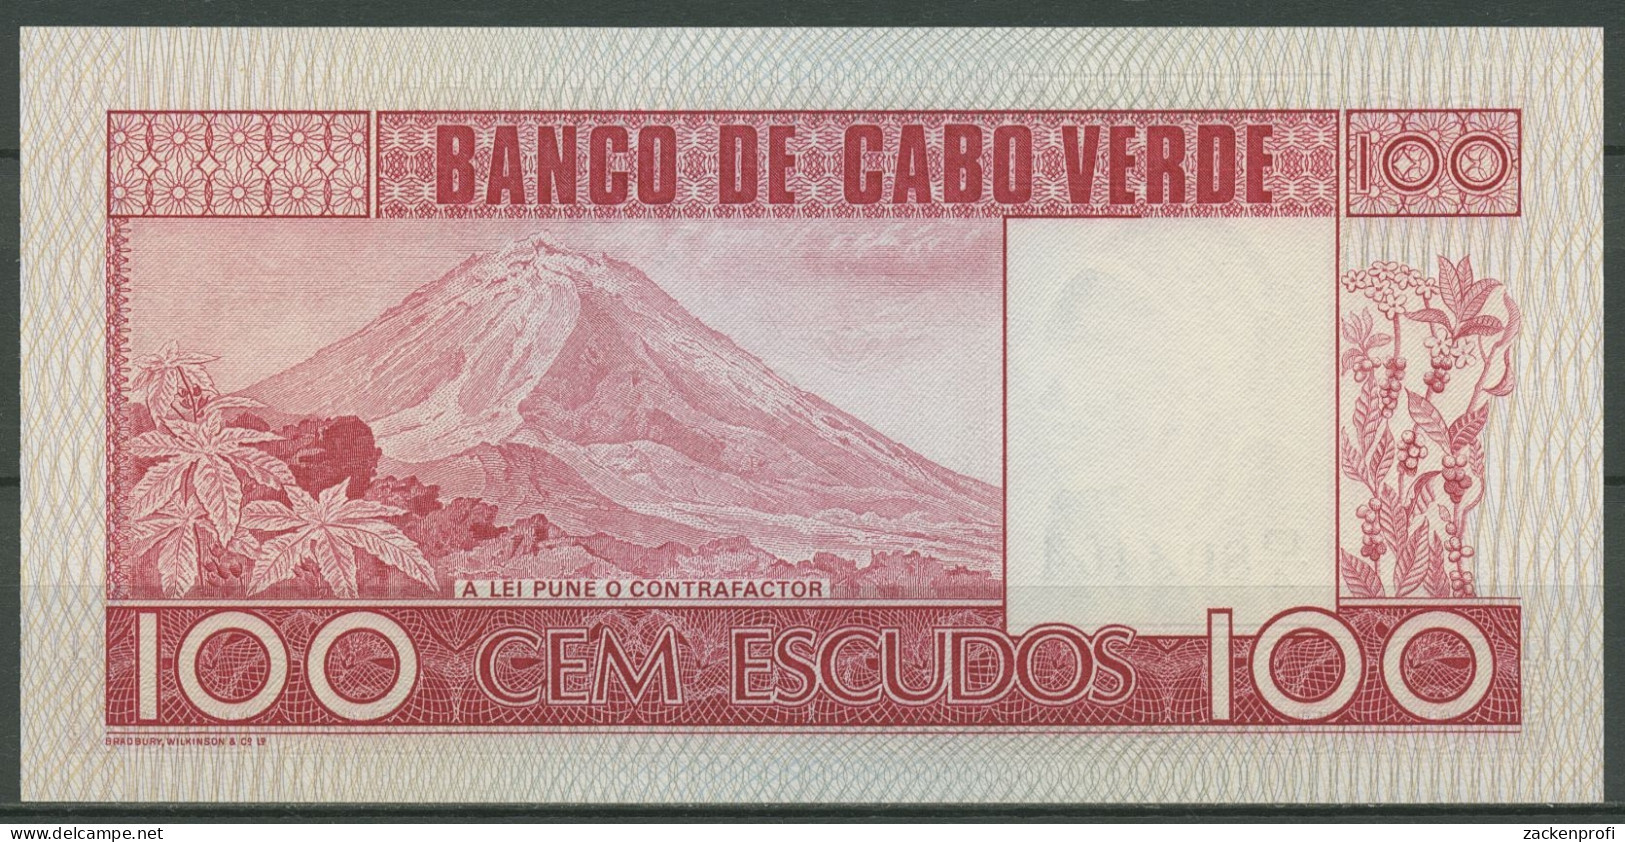 Kap Verde 100 Escudos 1977, KM 54 A Kassenfrisch (K338) - Cape Verde